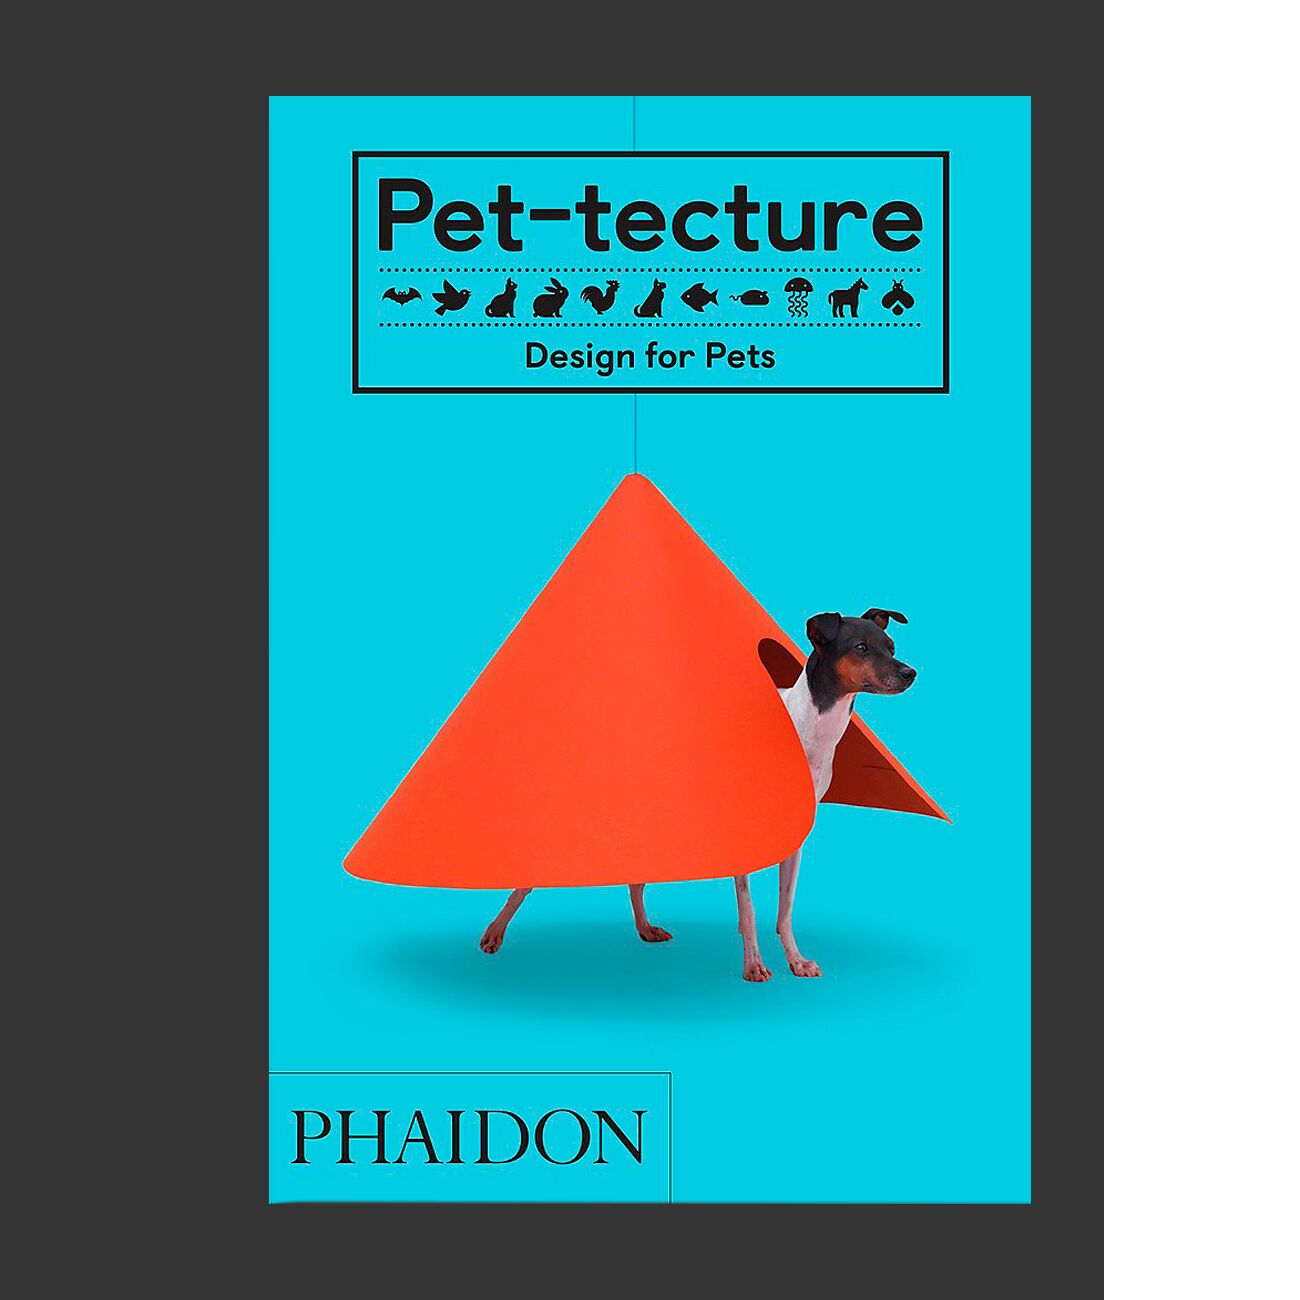 Pet-tecture: Design for Pets